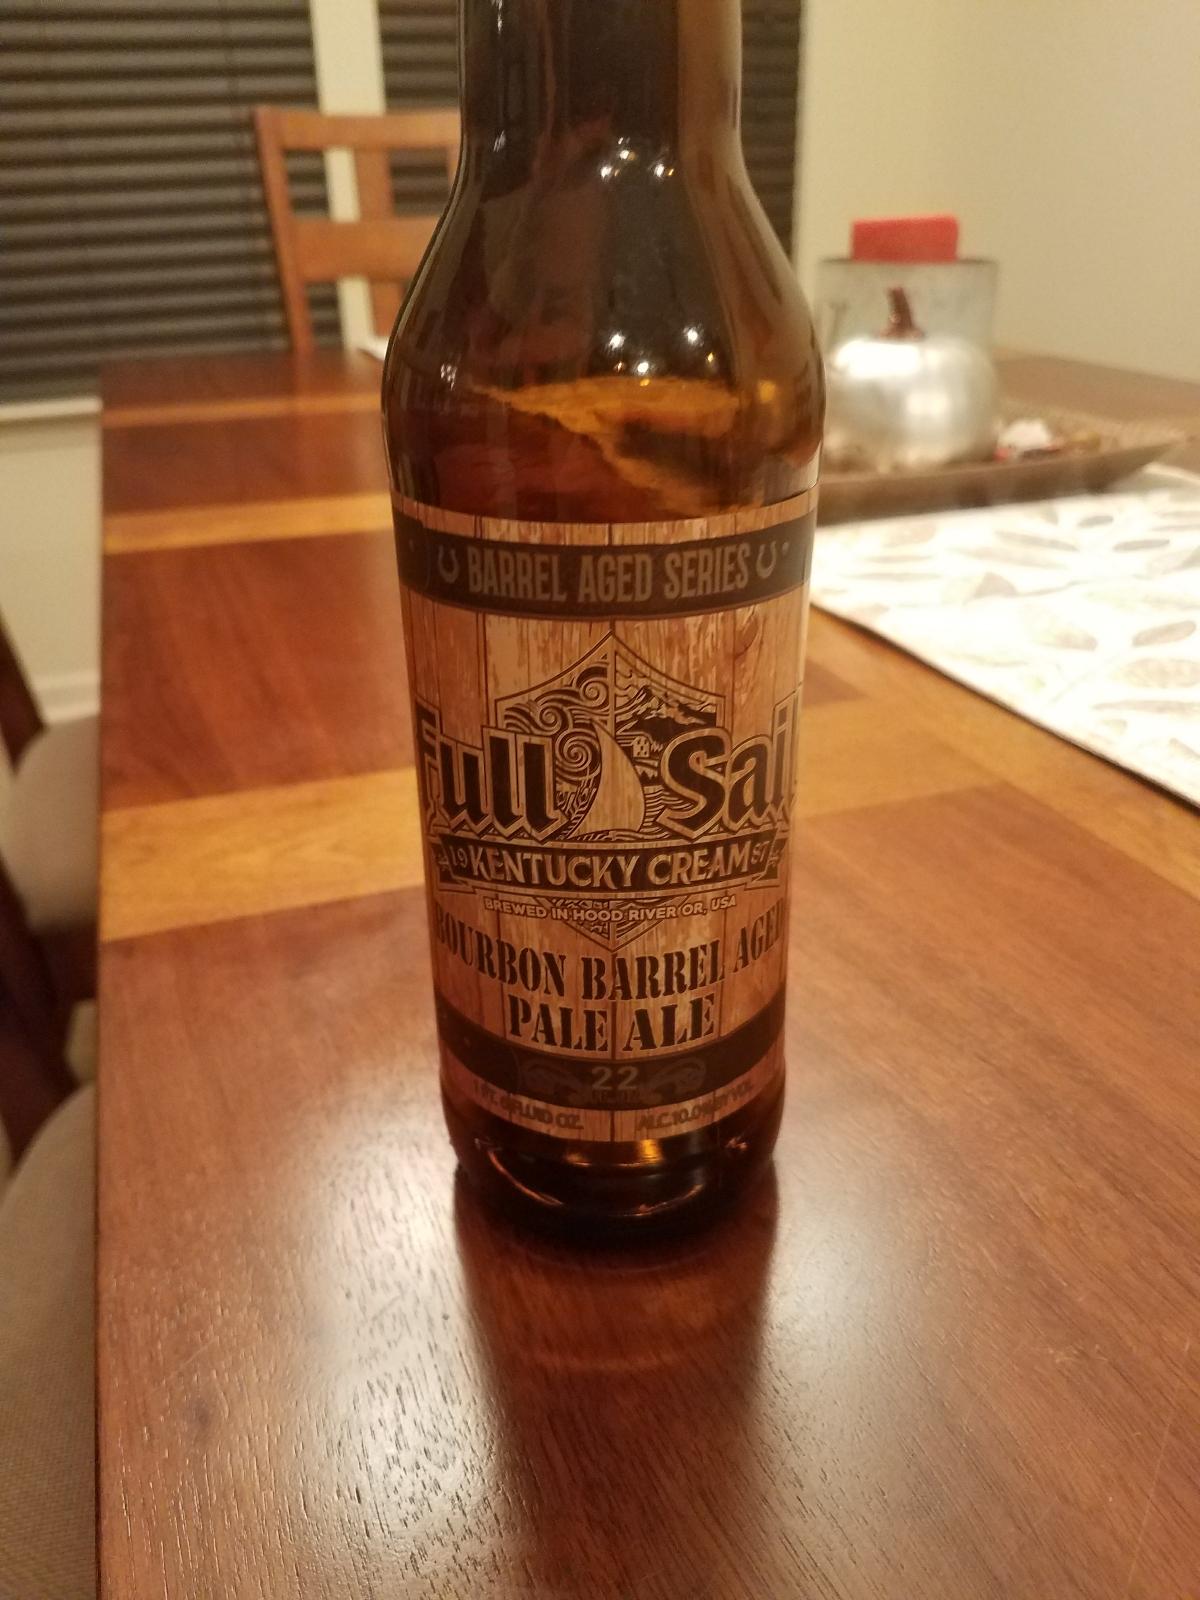 Pale Ale (Kentucky Cream Bourbon Barrel Aged)